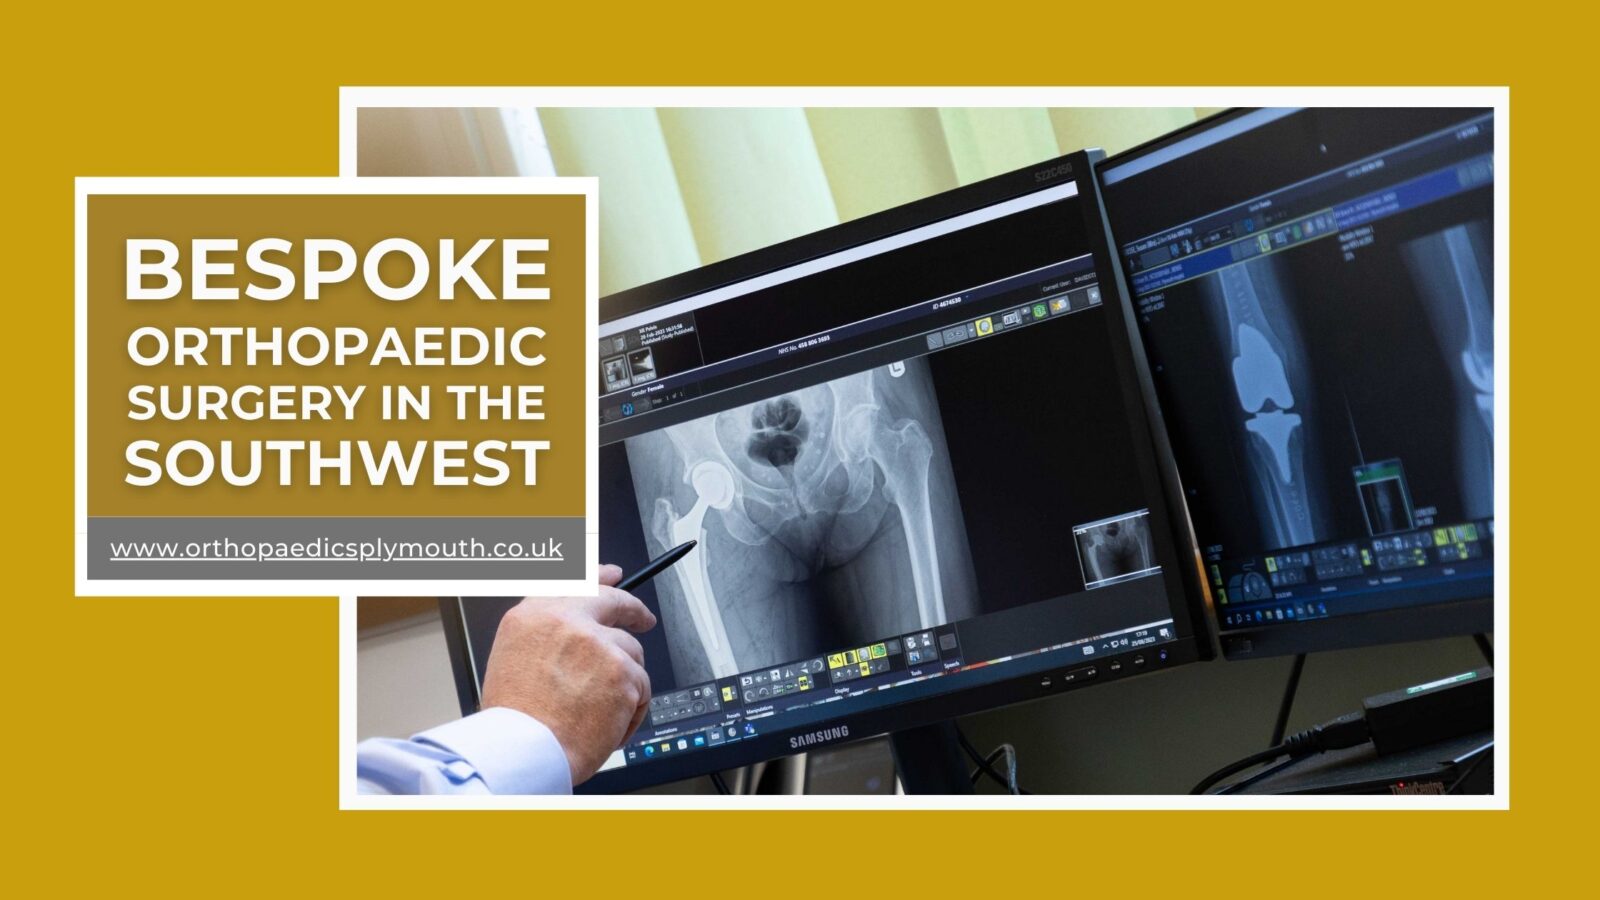 Bespoke Orthopaedic Surgery in the Southwest